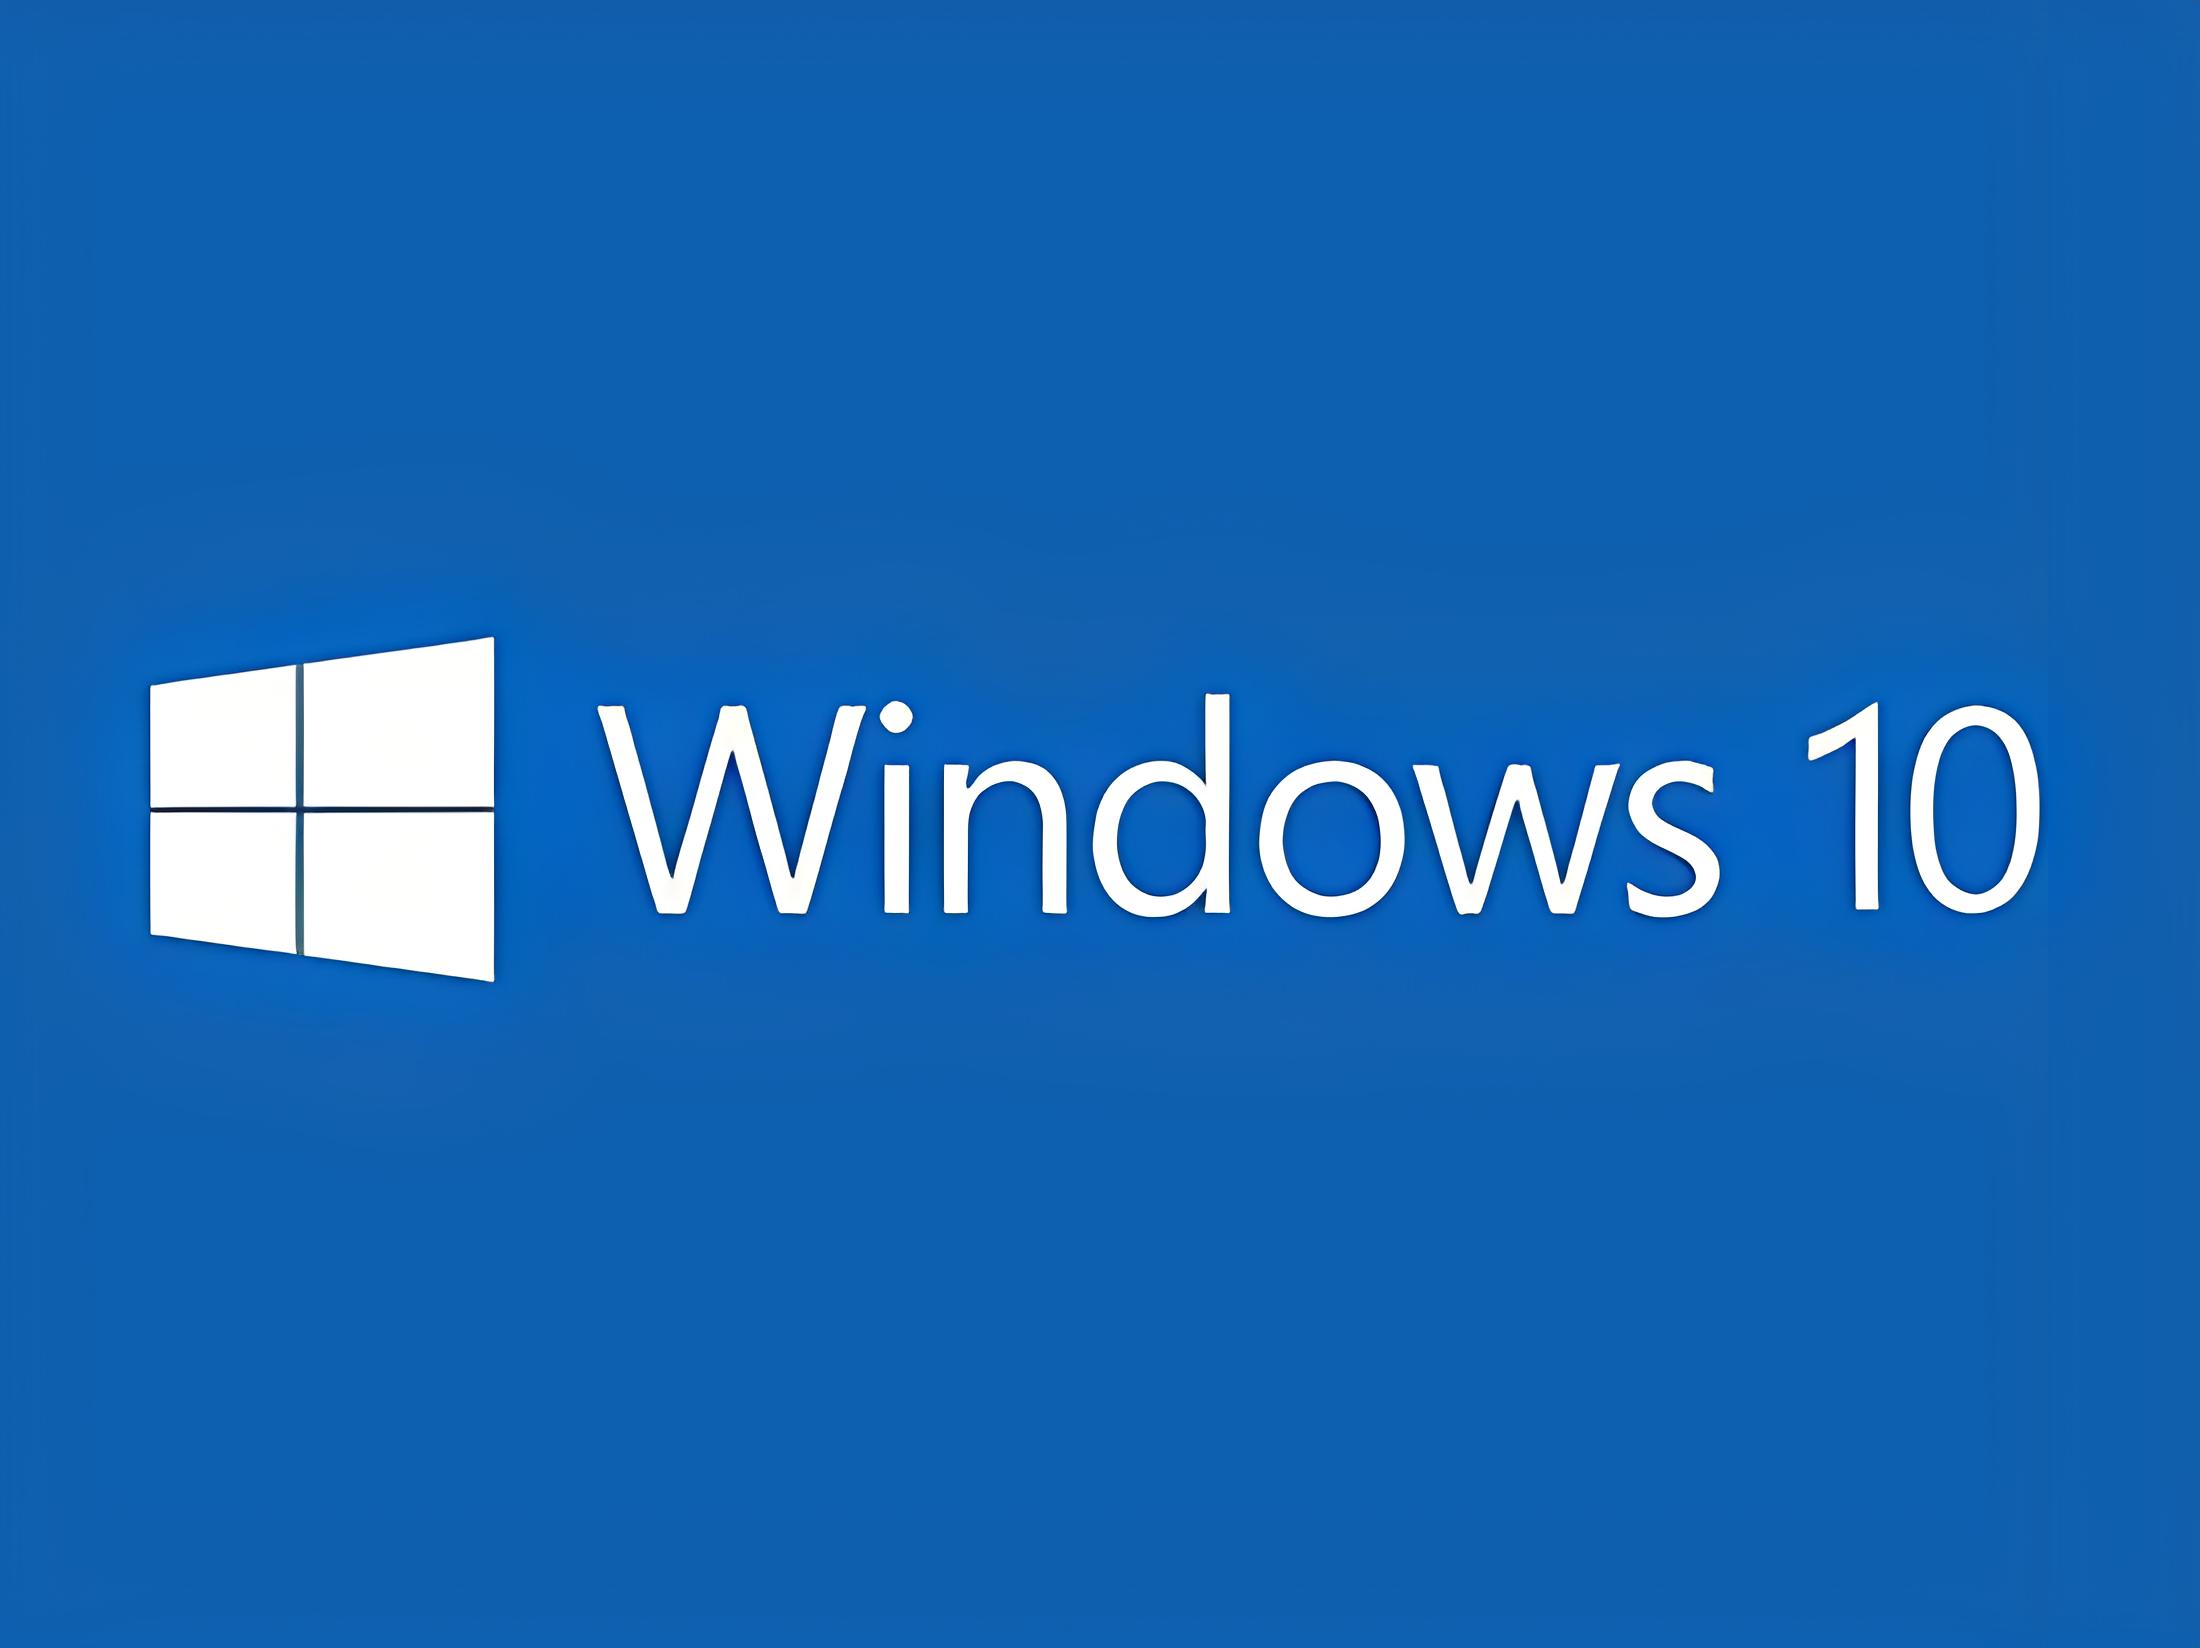 Windows 10 business editions(批量版)1909 (x32位)ISO系统镜像下载